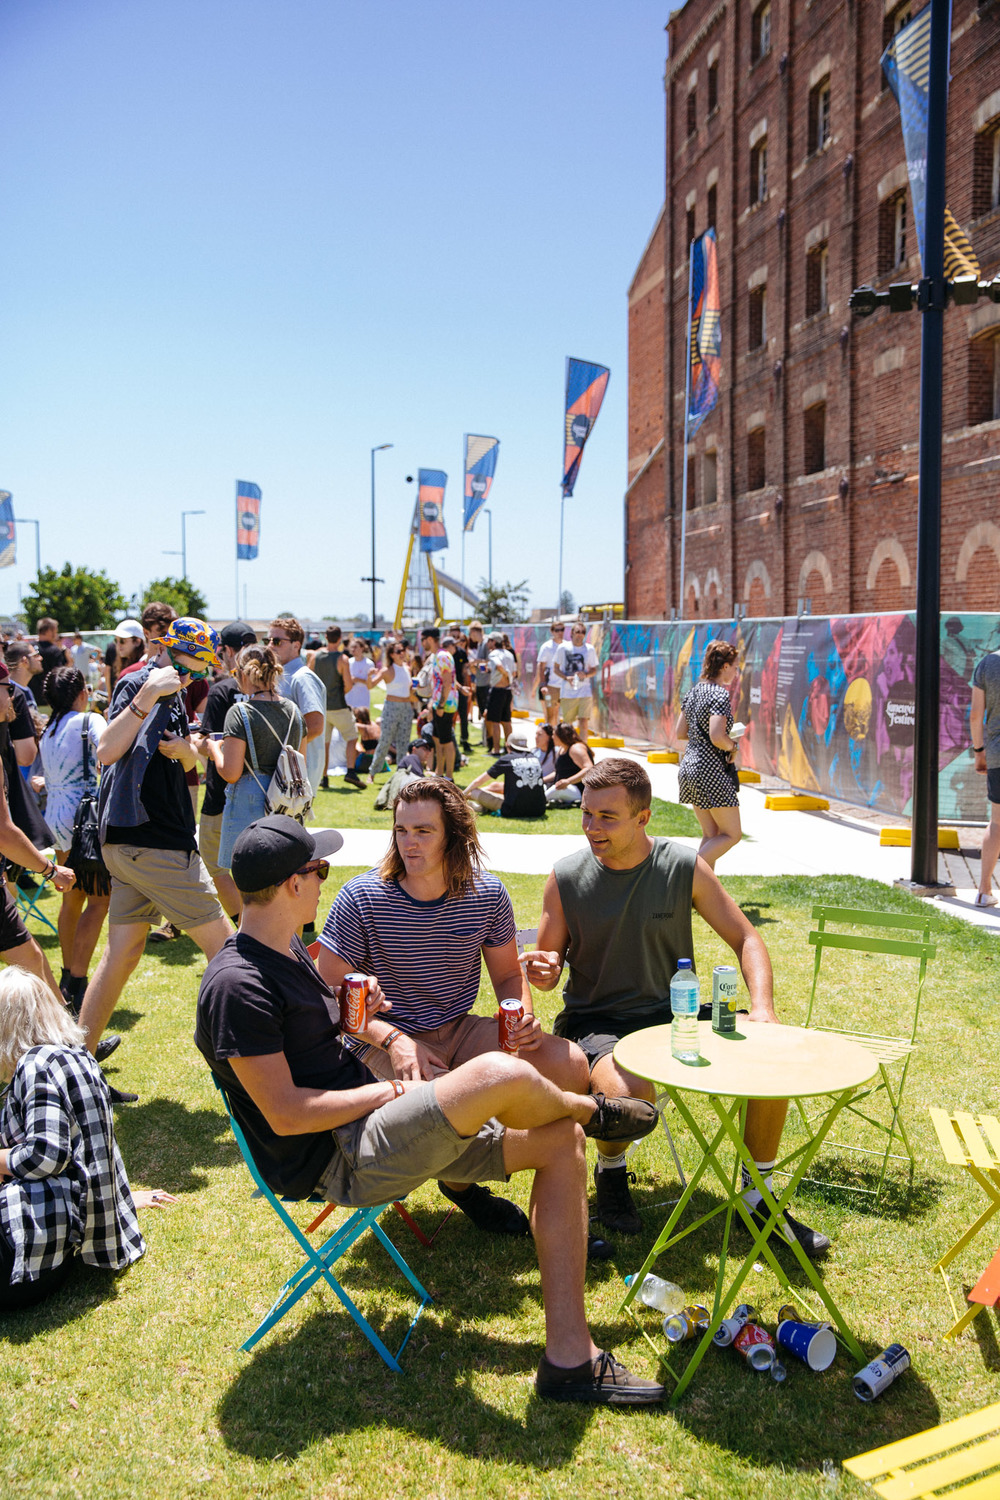 Adelaide Laneway Festival